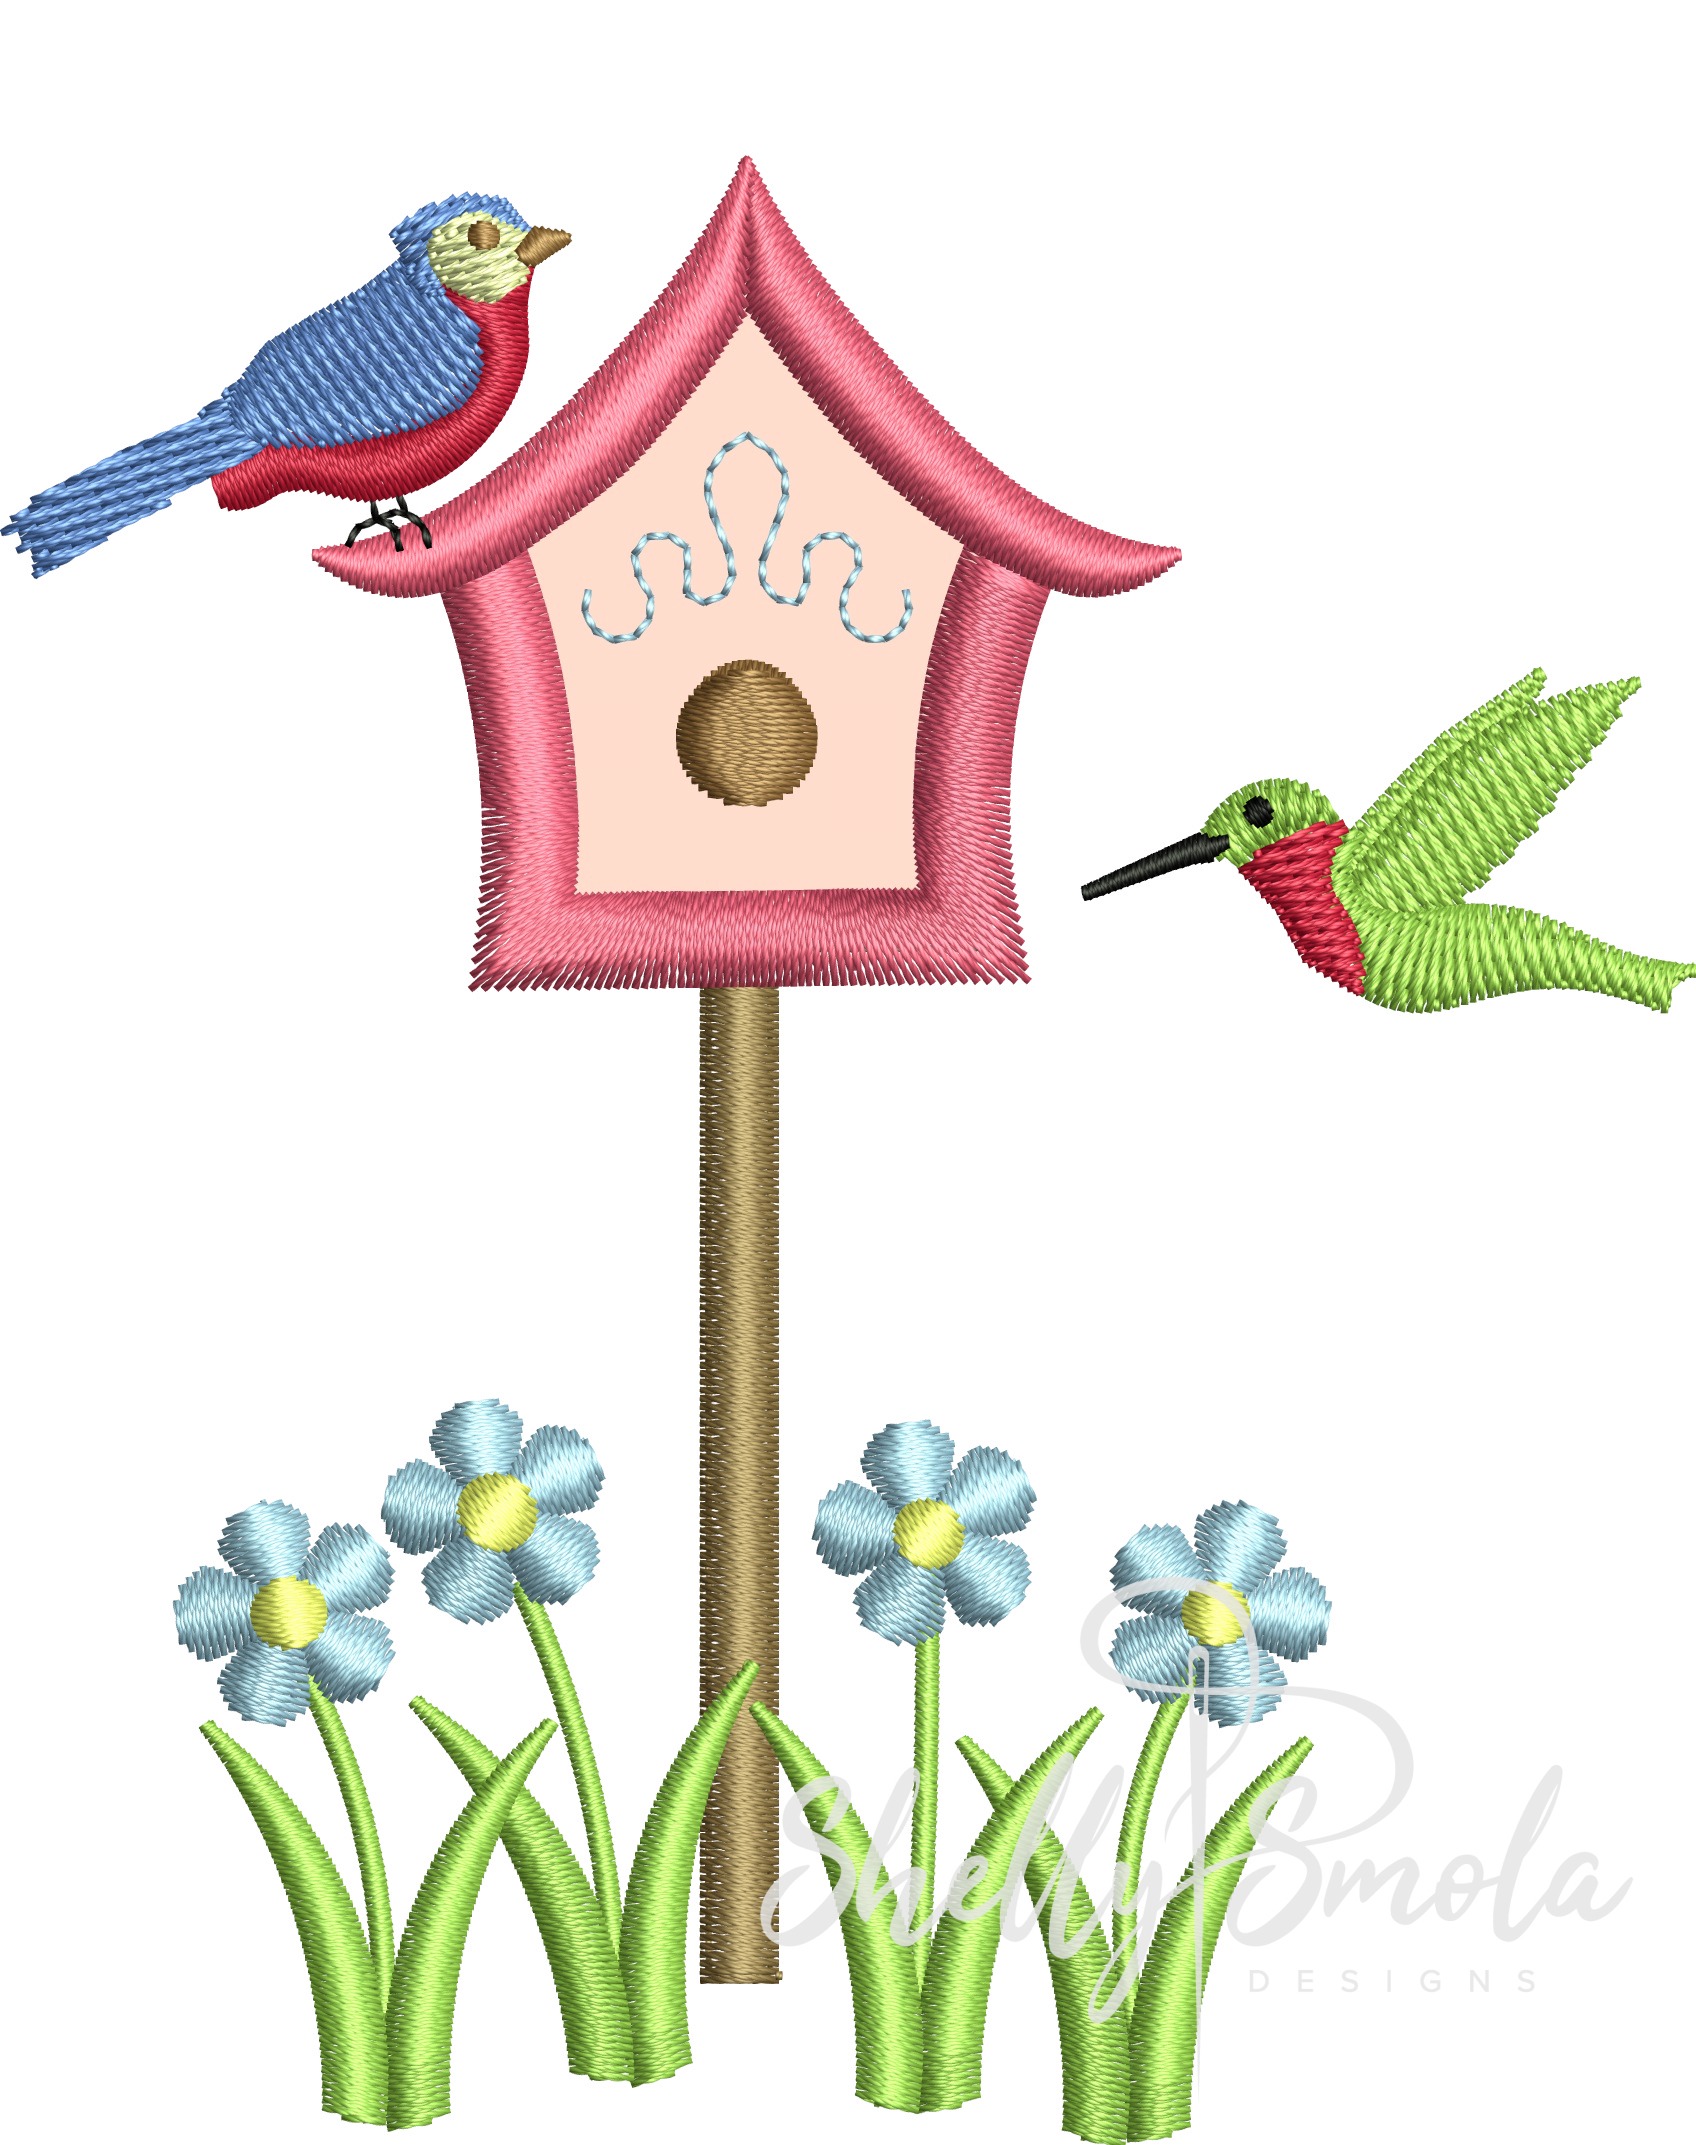 Birdhouse by Shelly Smola